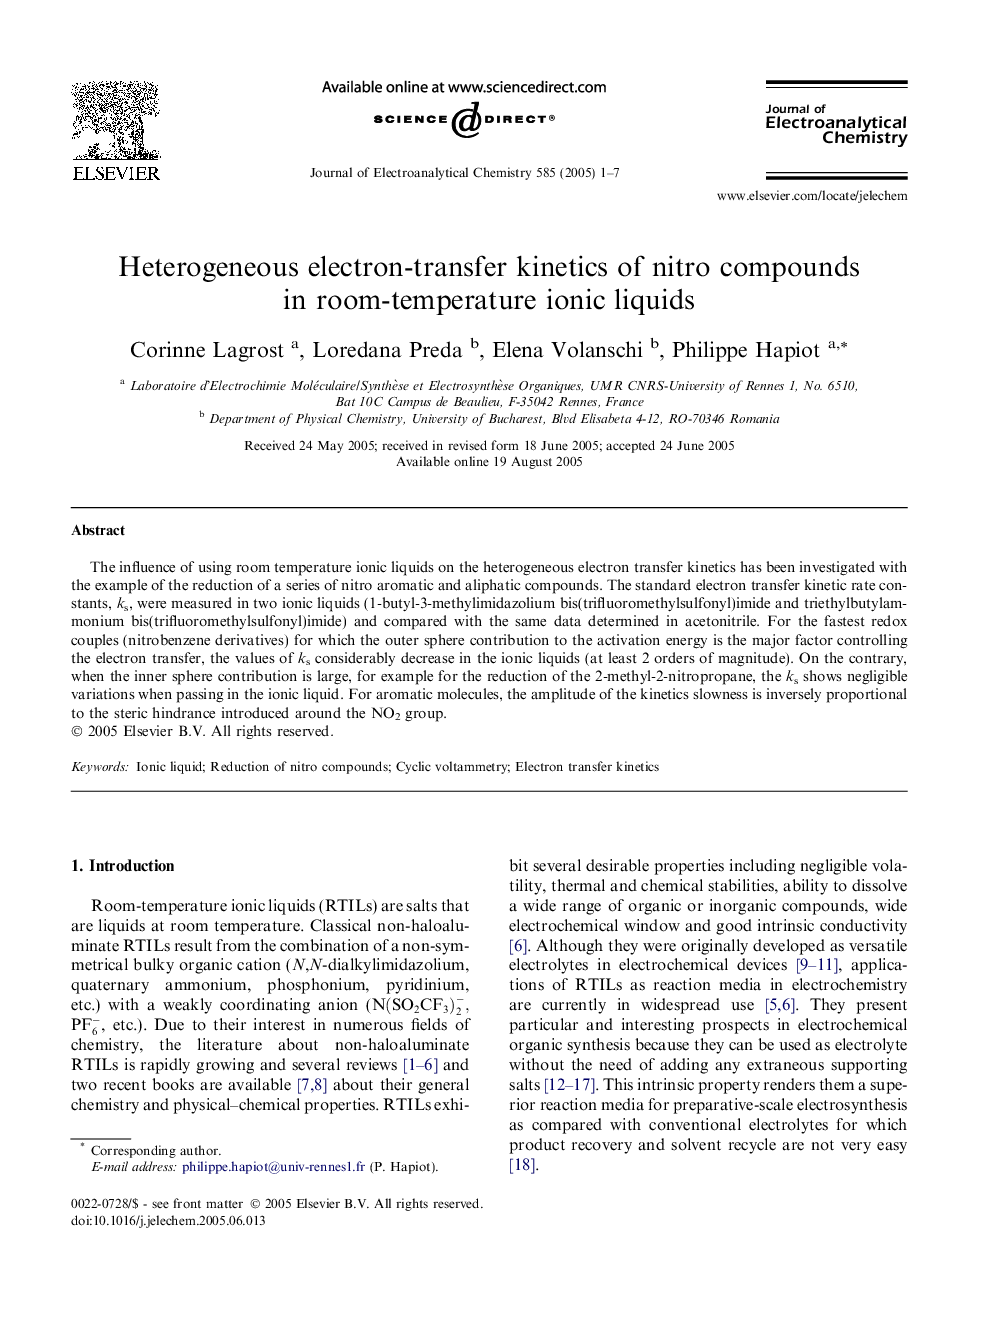 Heterogeneous electron-transfer kinetics of nitro compounds in room-temperature ionic liquids